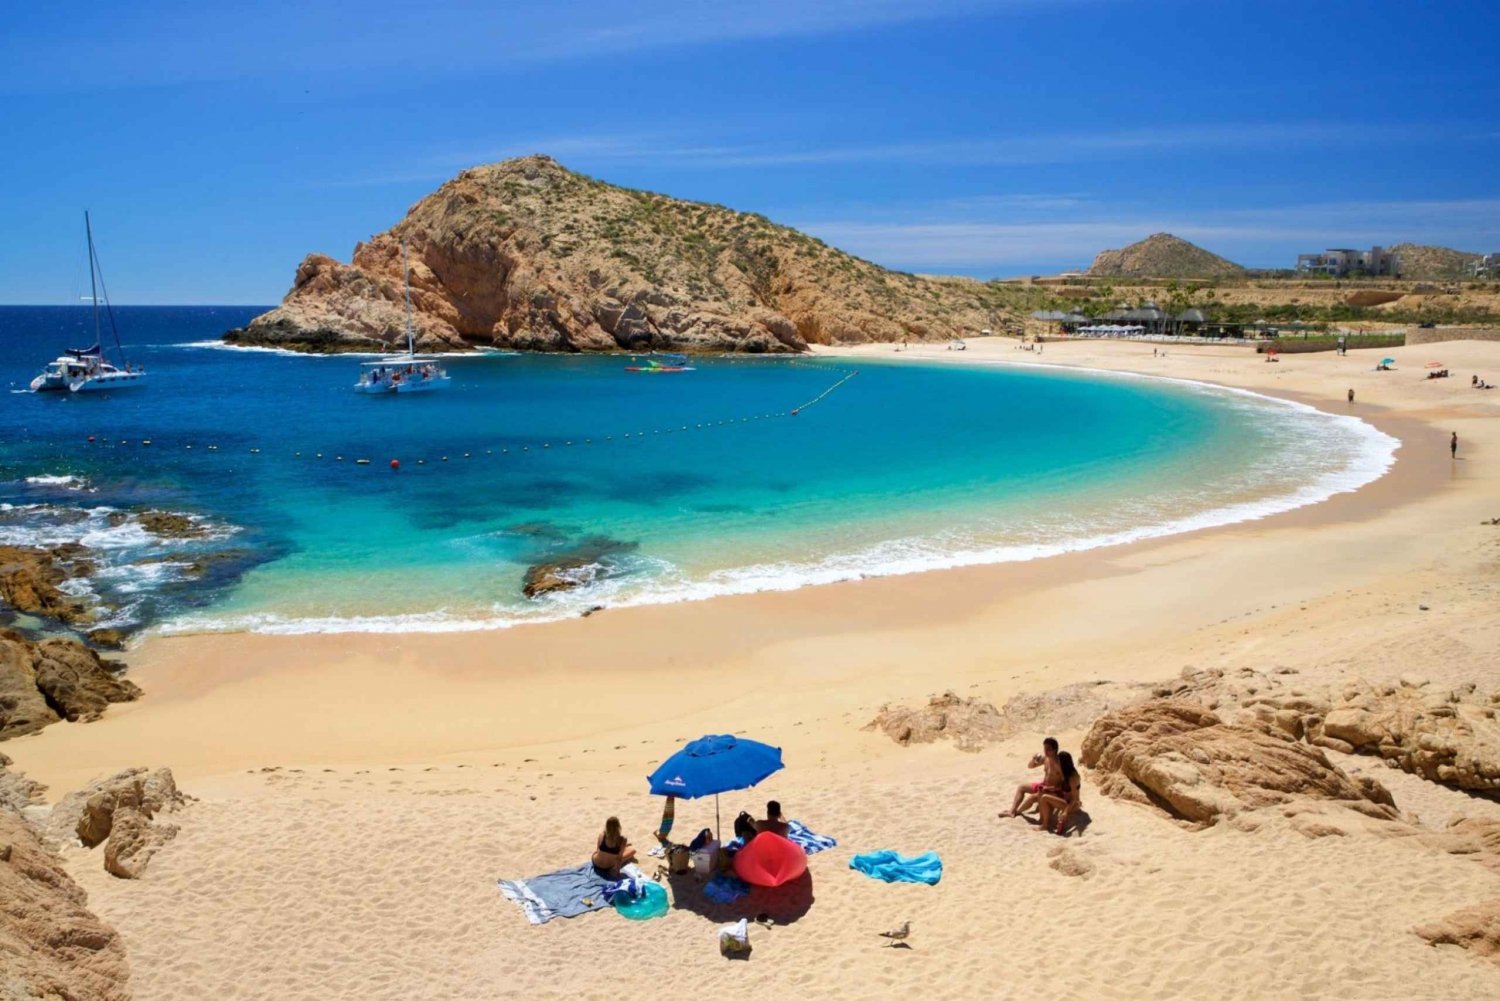 Cabo San Lucas: Snorkel Tour with Open Bar & Snacks